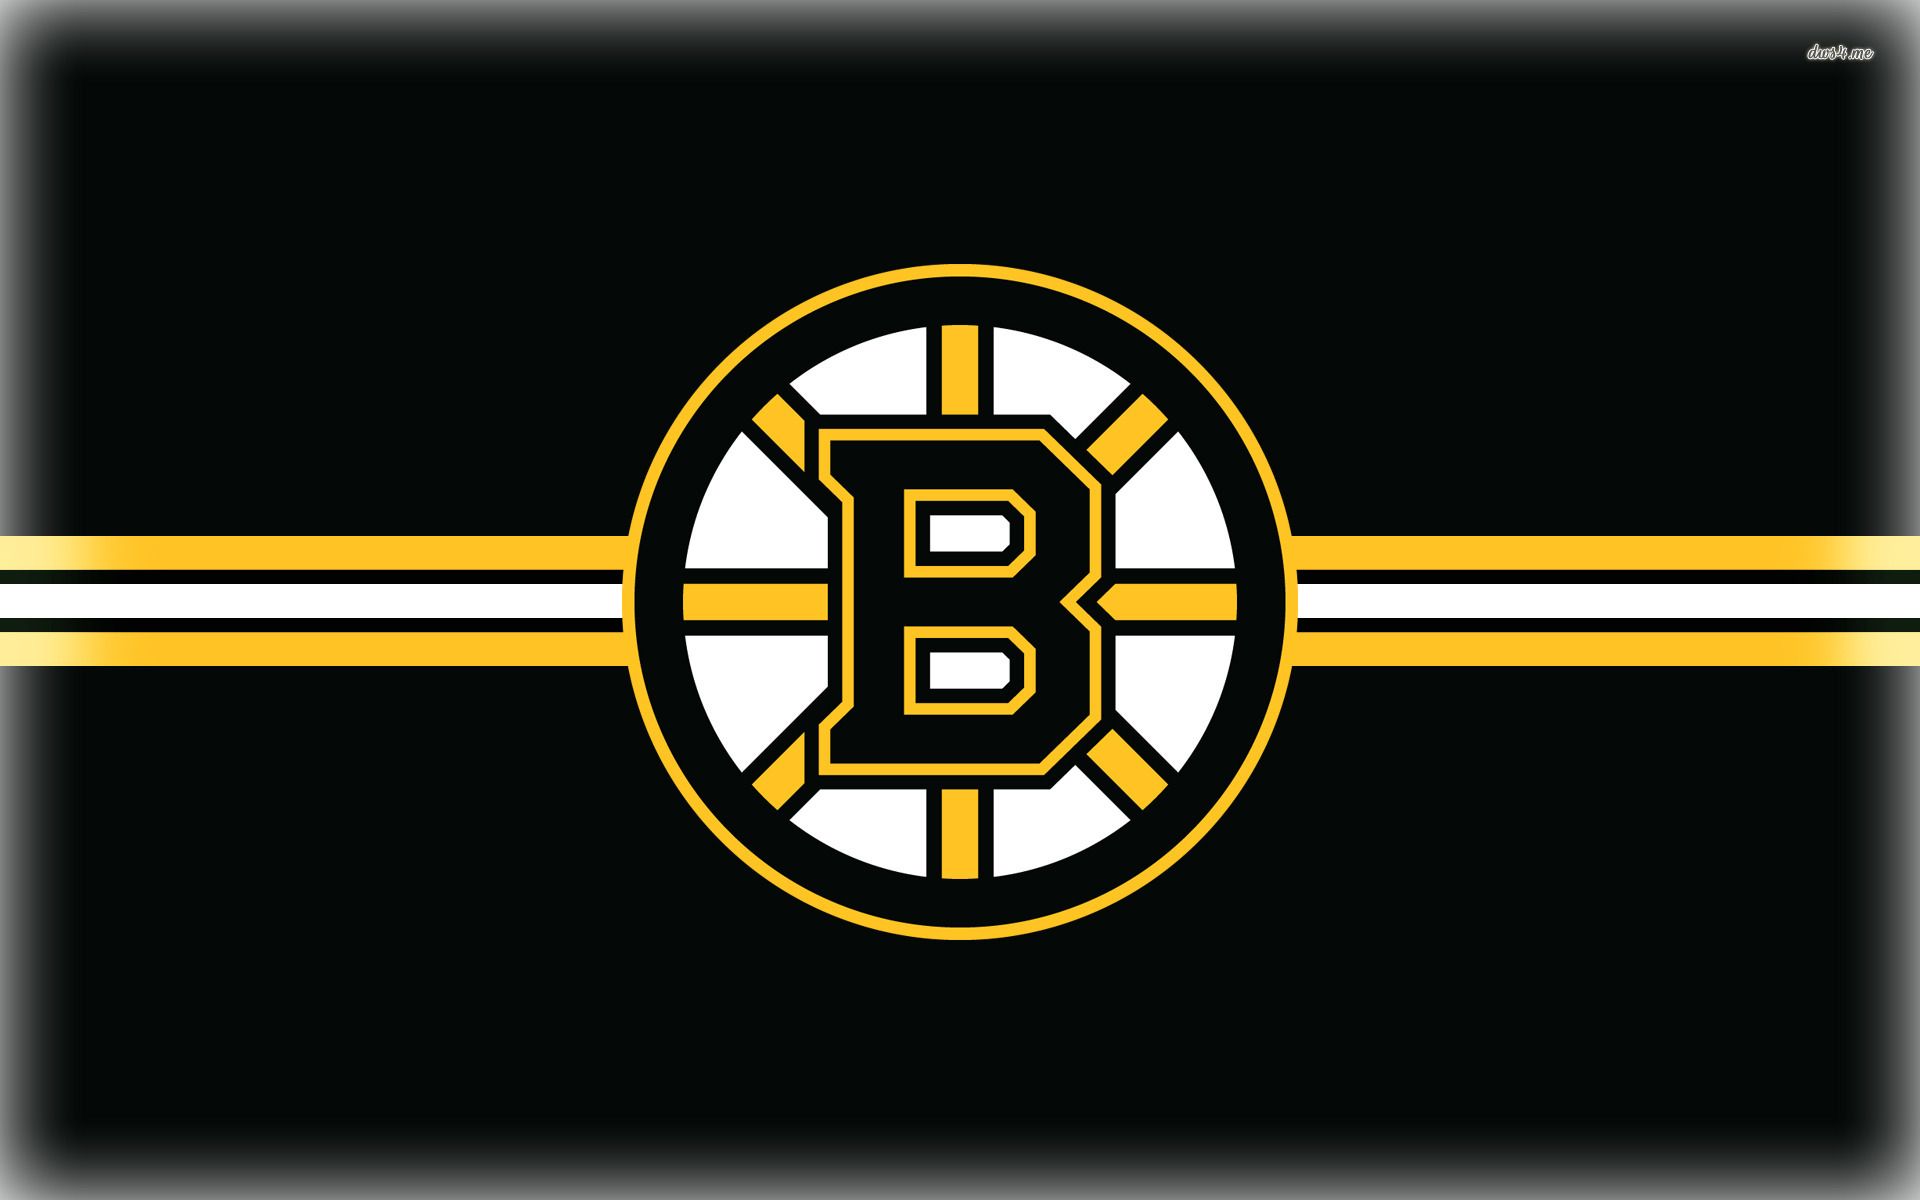 Boston Bruins wallpaper - Sport wallpapers